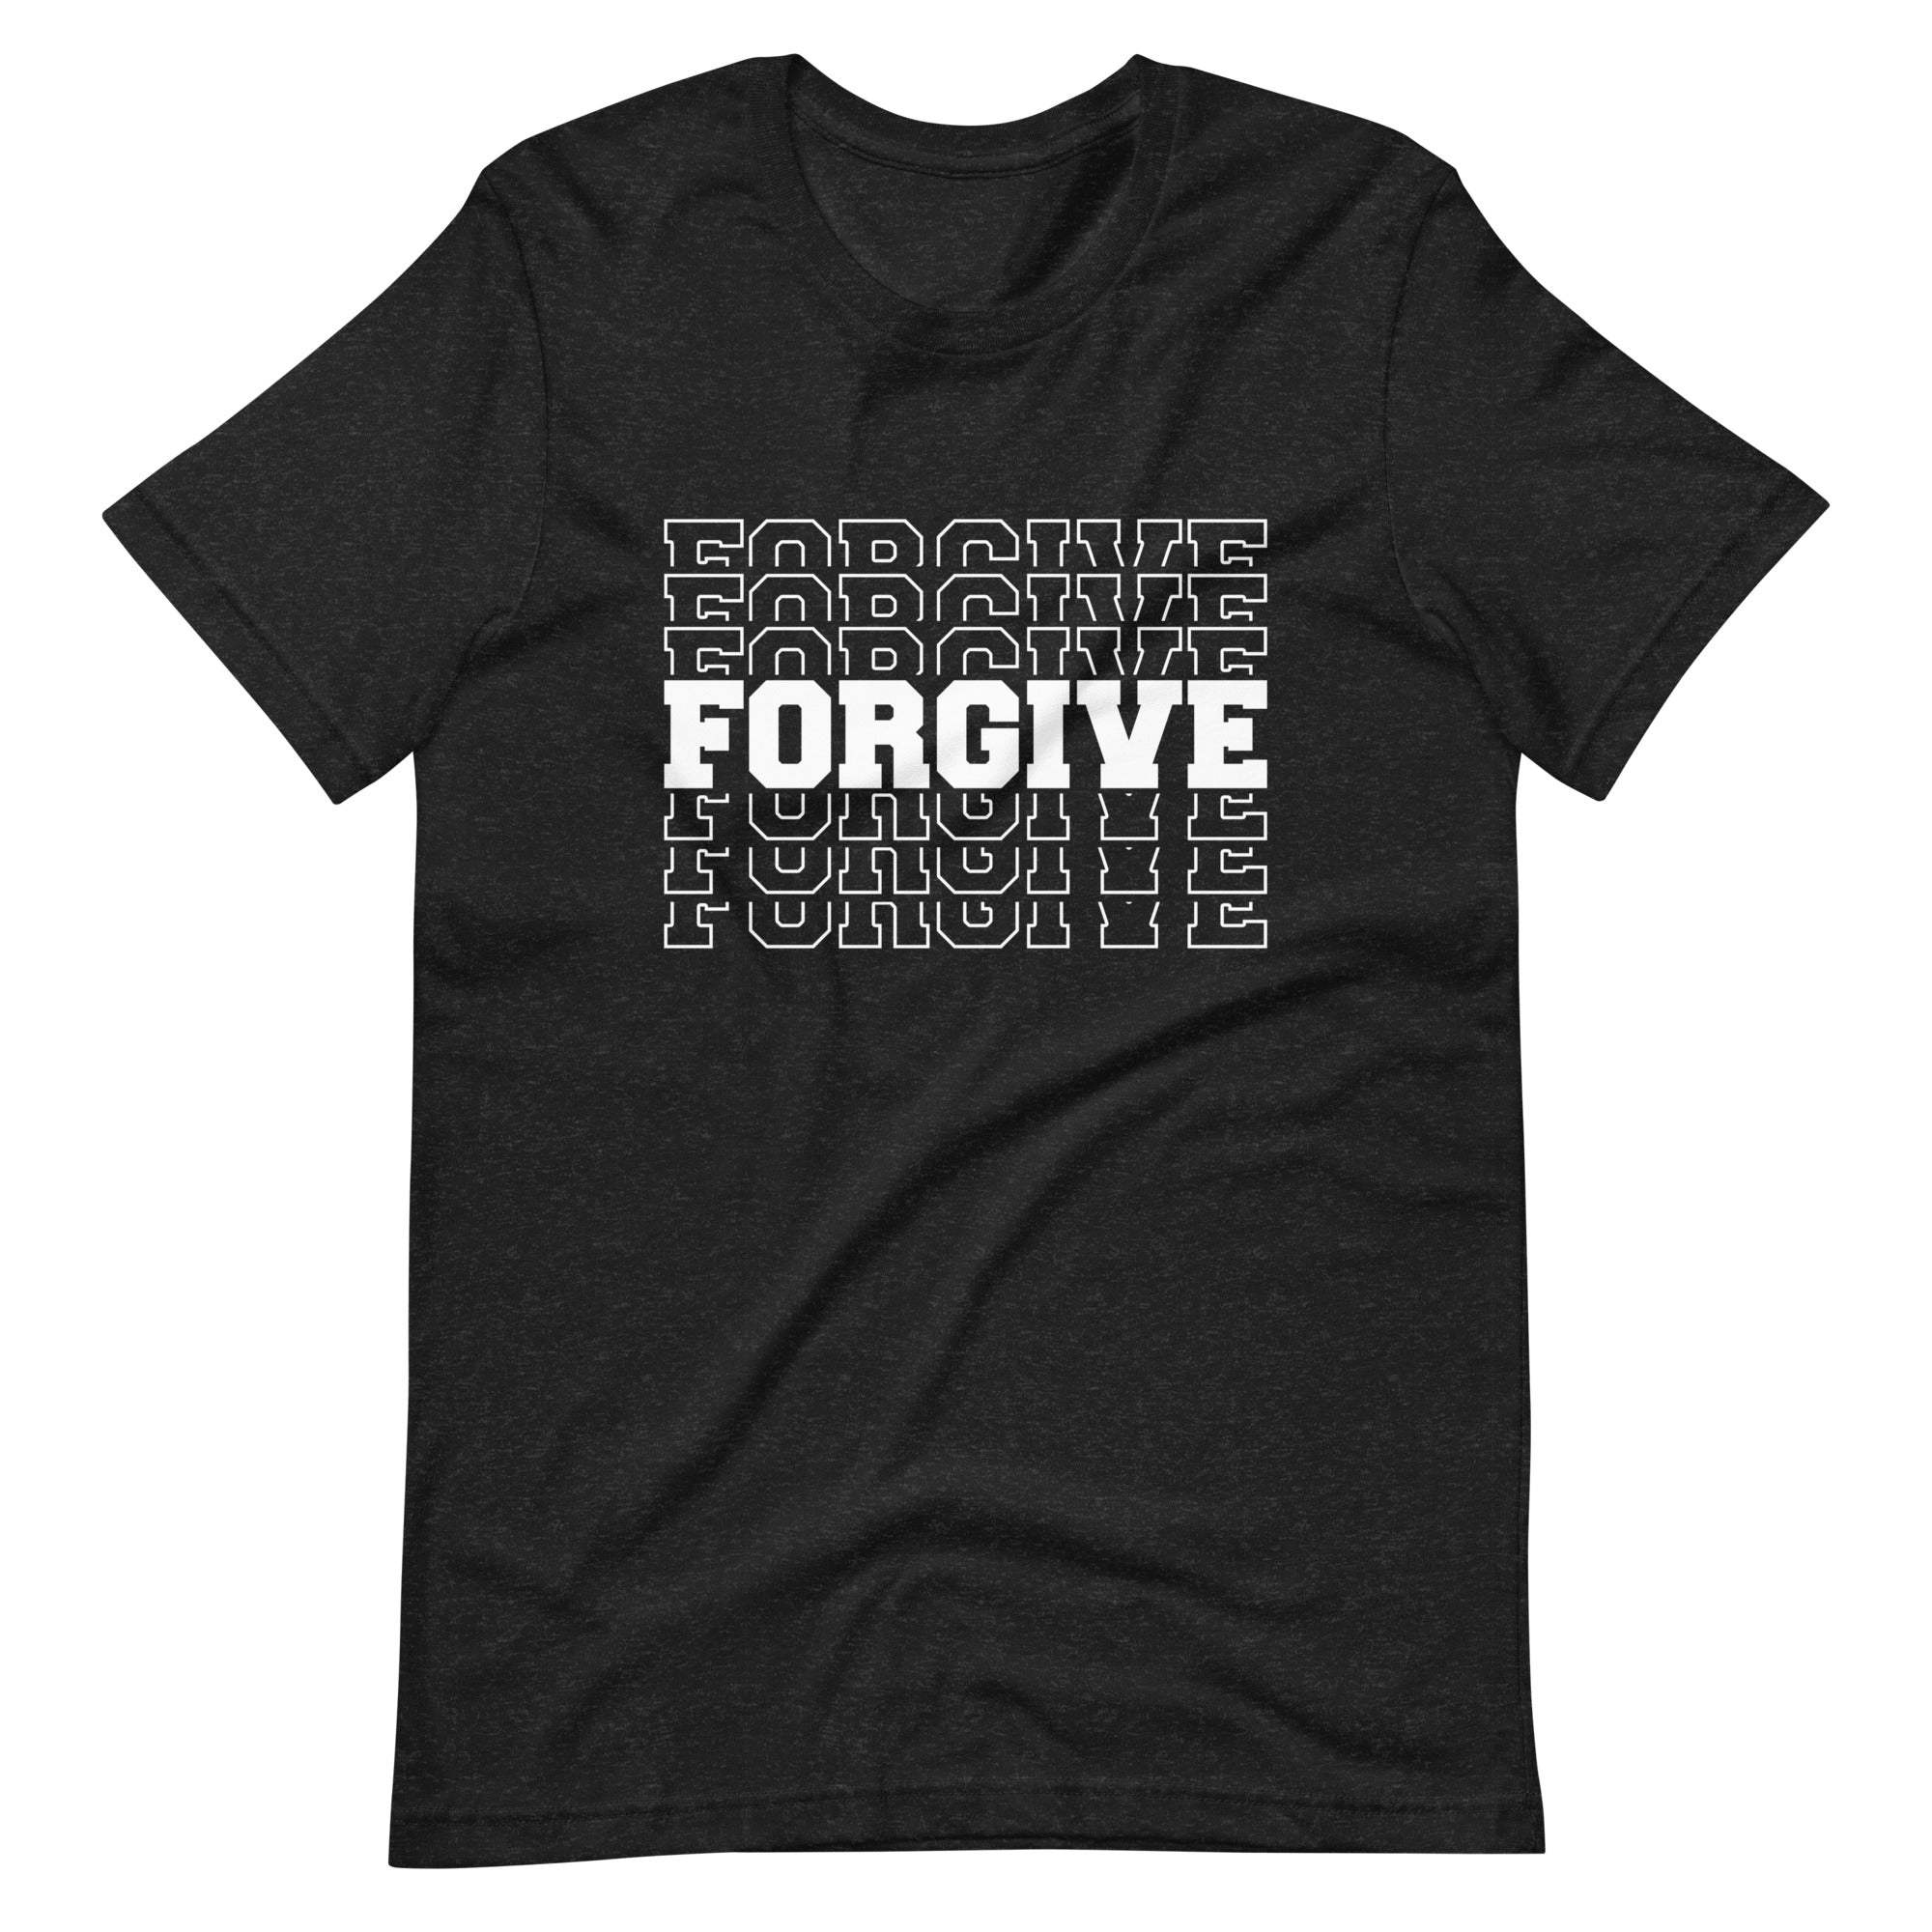 Forgive Quote Unisex T-shirt - ZKGEAR